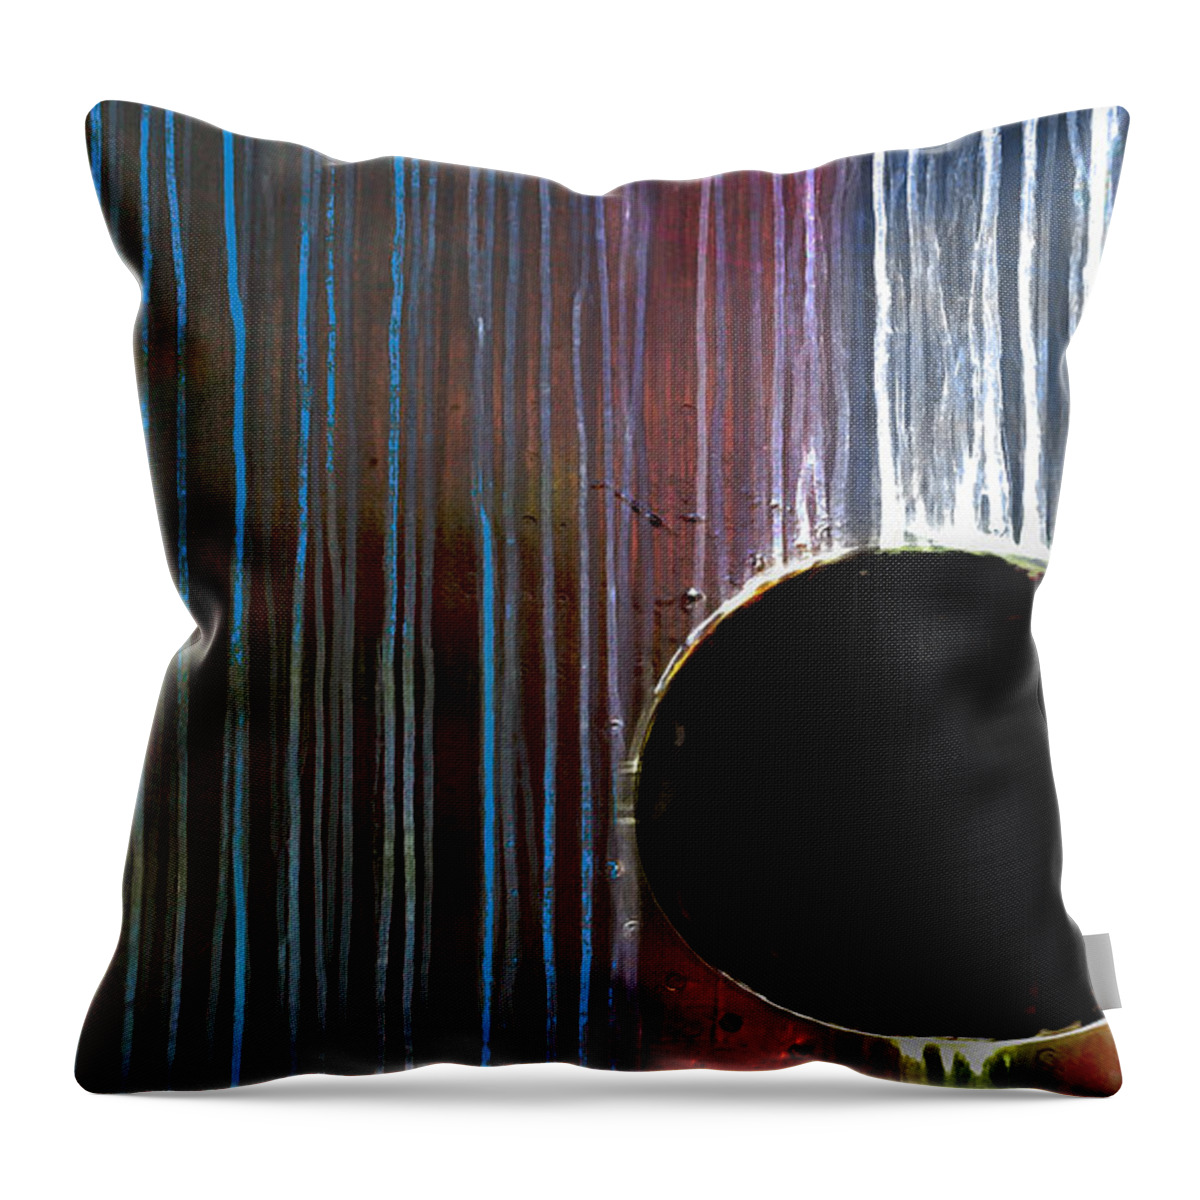 Sphere Throw Pillow featuring the digital art Sphere by Ken Walker